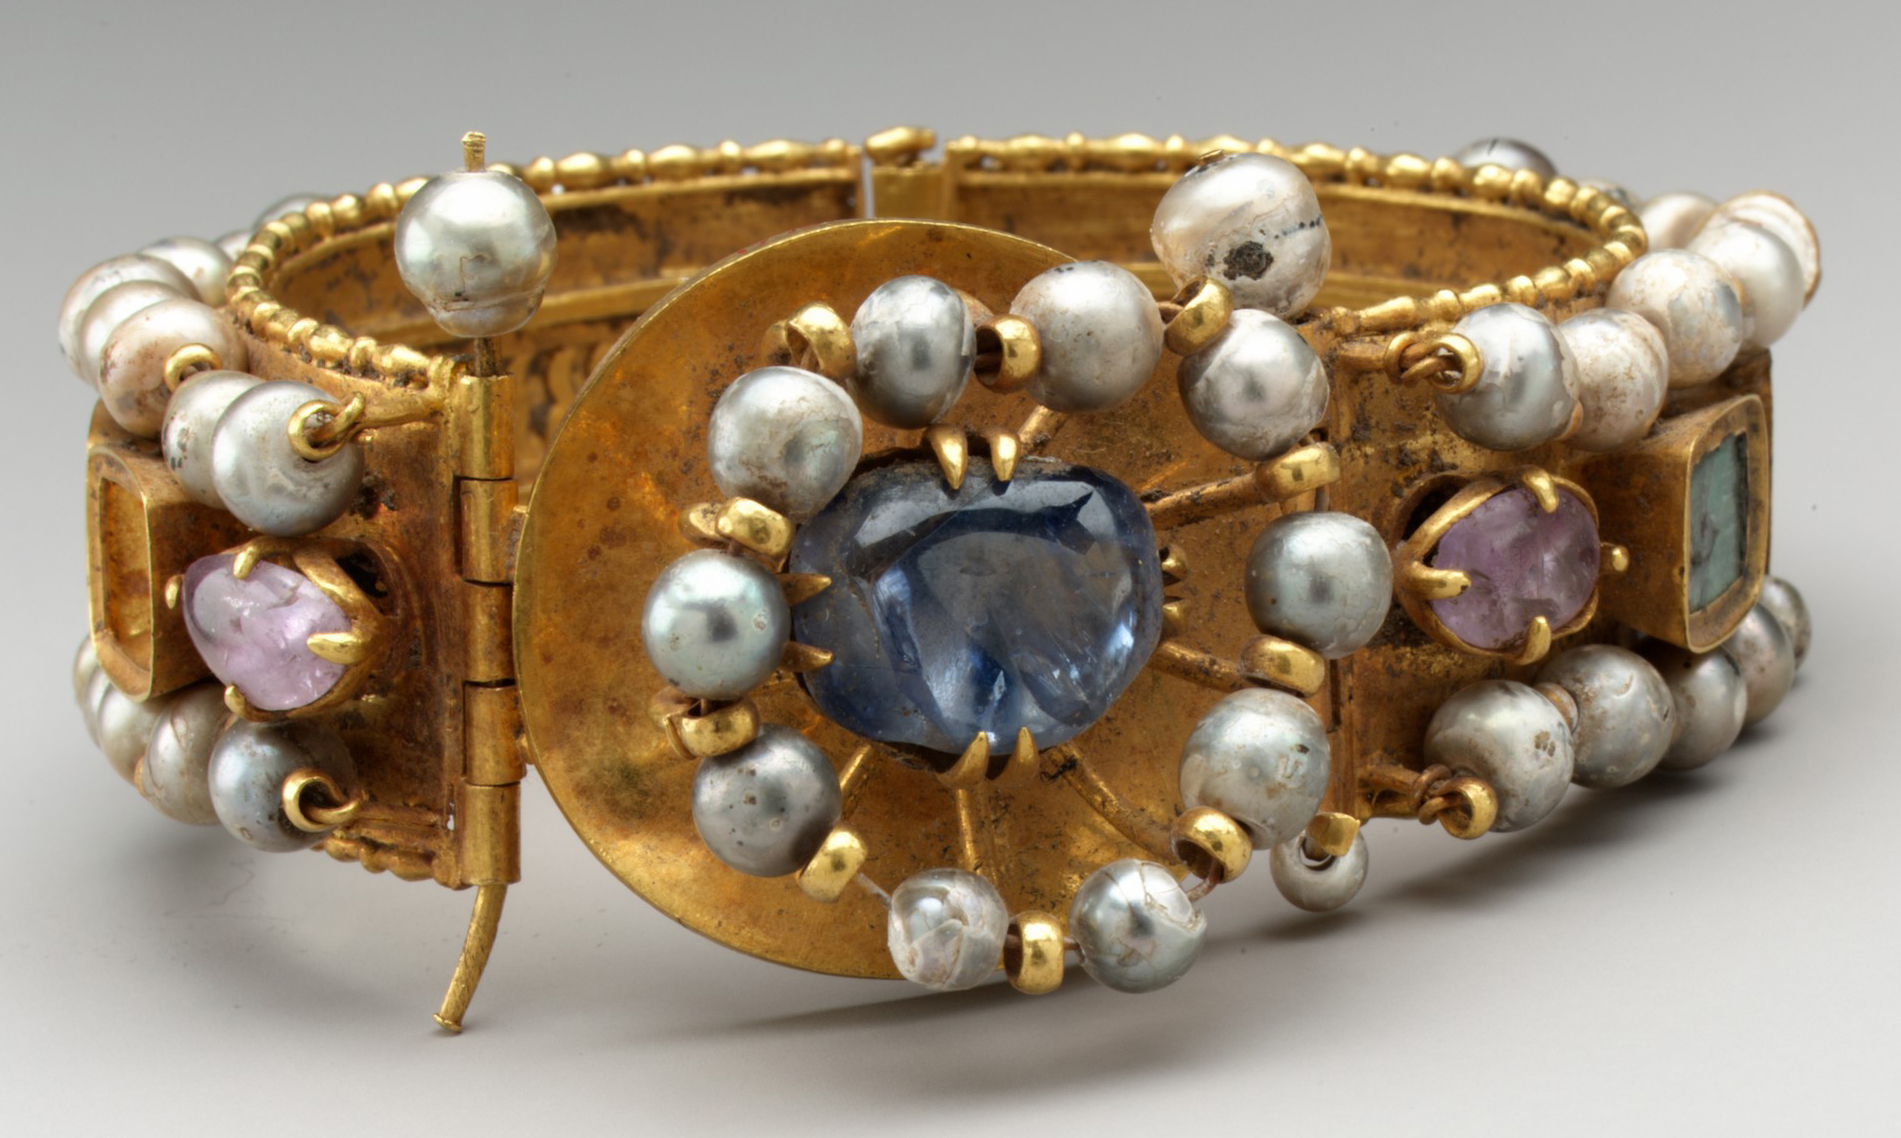 Bracelet, early Byzantine, 500–700, Constantinople (?), gold, silver, pearl, amethyst, sapphire, opal, glass, quartz, and emerald plasma, c. 4 x 8 cm (The Metropolitan Museum of Art)